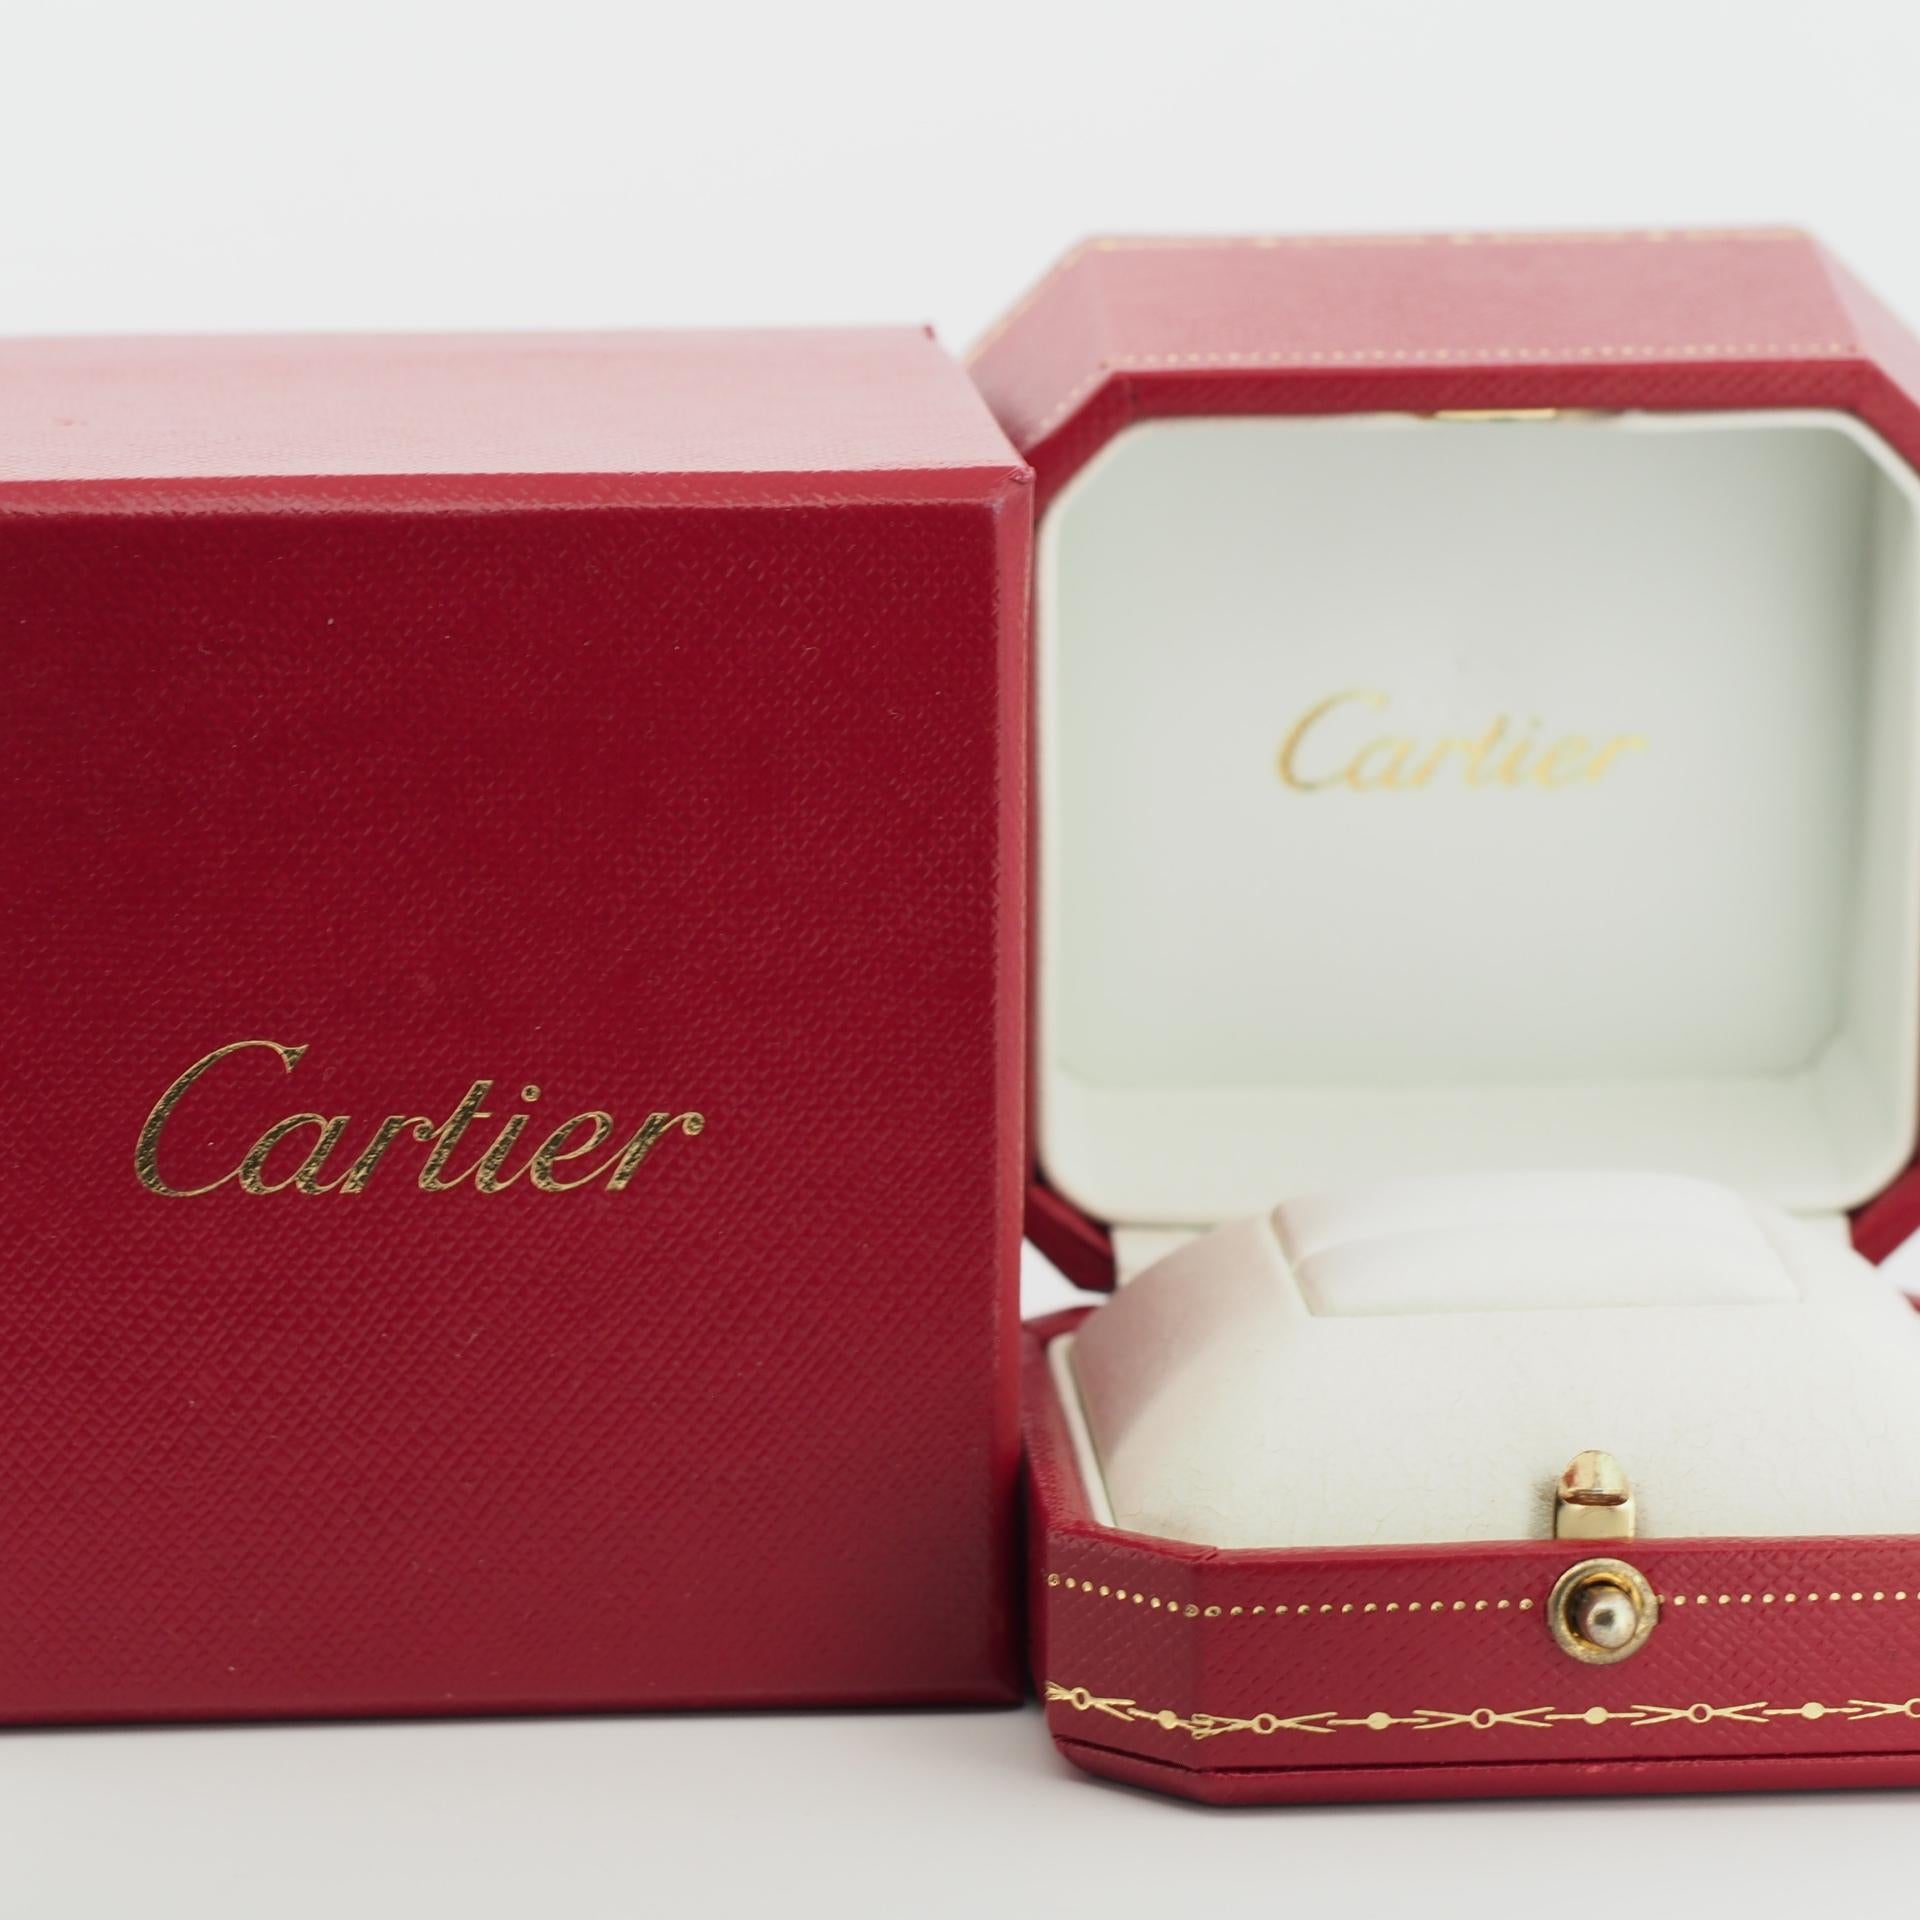 Cartier 1895 Solitaire 0.18 Carat Diamond Ring Pt 49 For Sale 4